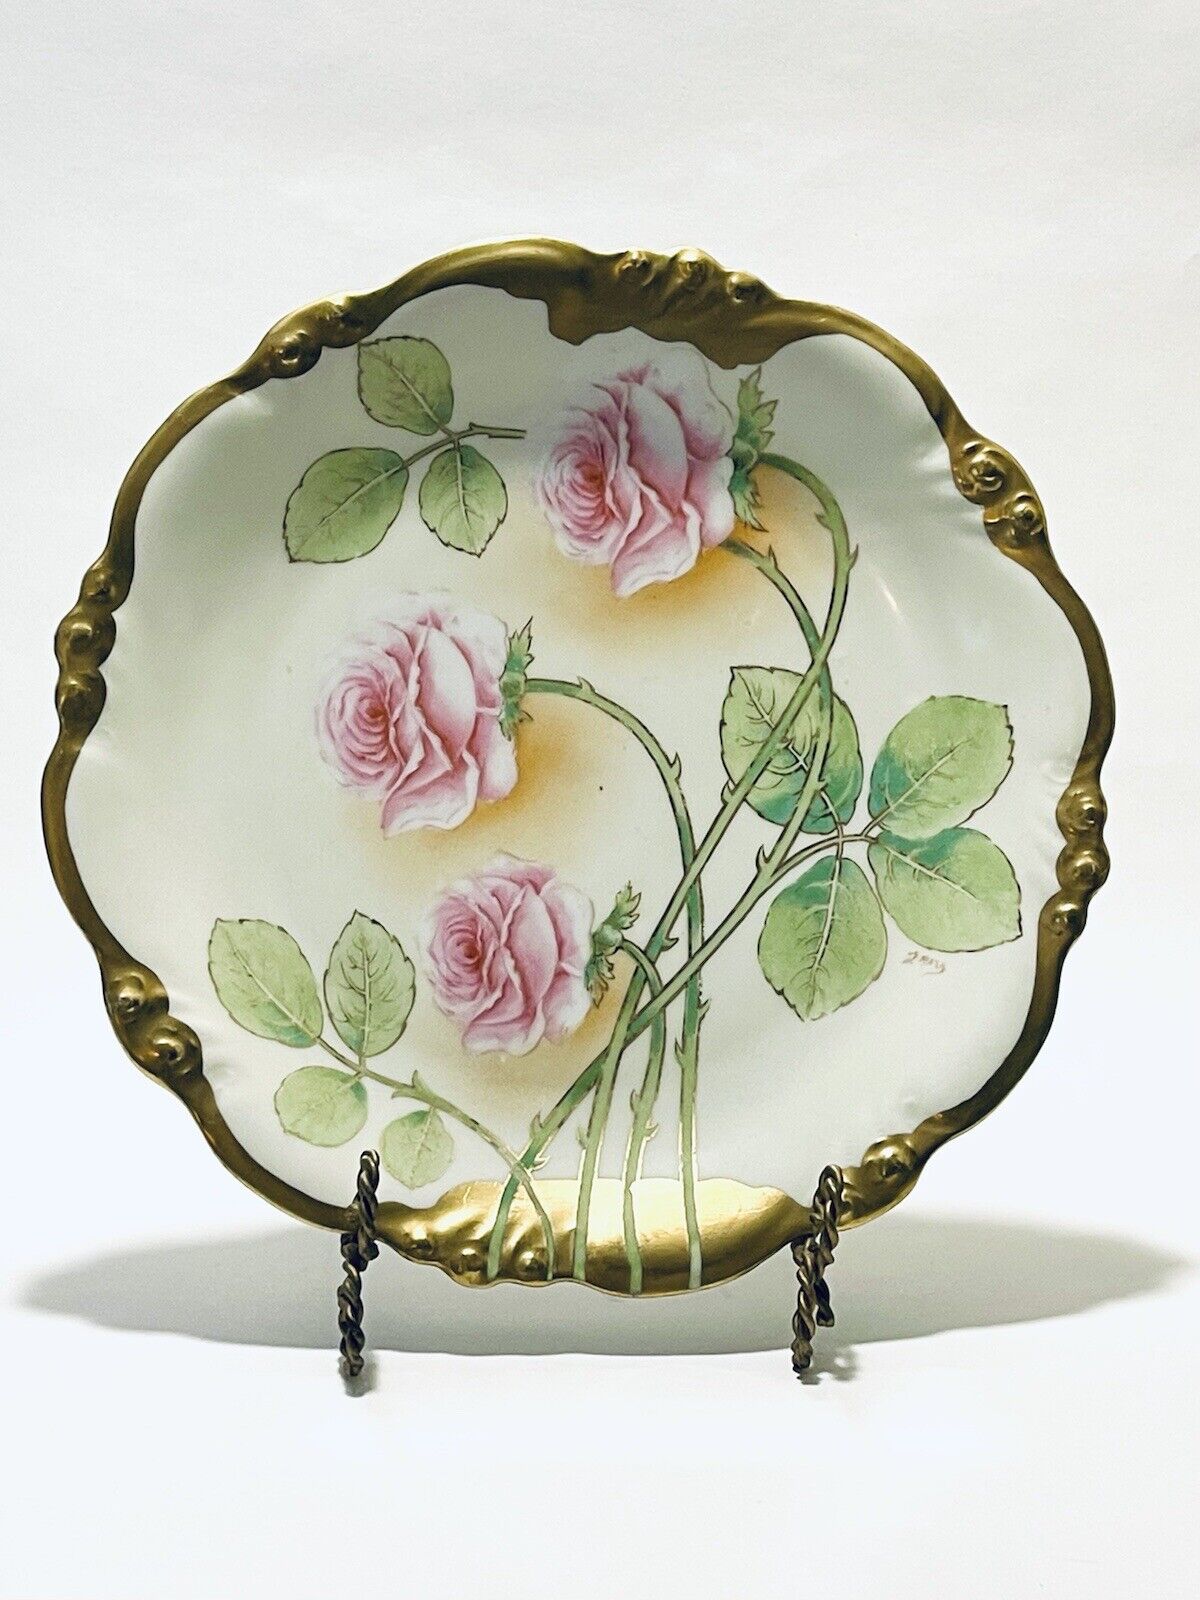 Marvelous Vintage Hand Painted Elite Collection Limoges France Decorative Plates